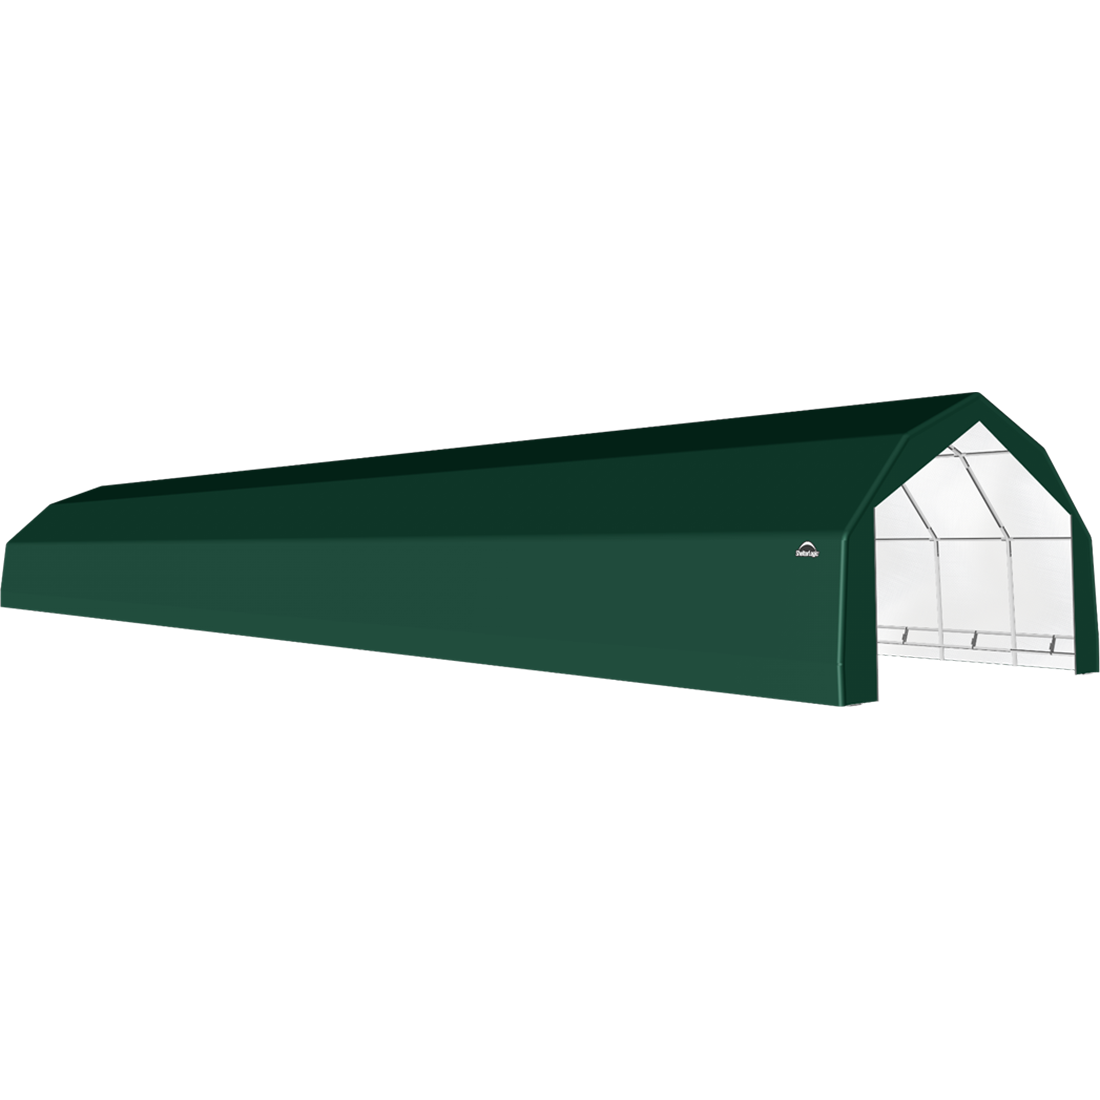 ShelterTech SP Series Barn Shelter, 20 ft. x 92 ft. x 12 ft. Heavy Duty PVC 14.5 oz. Green